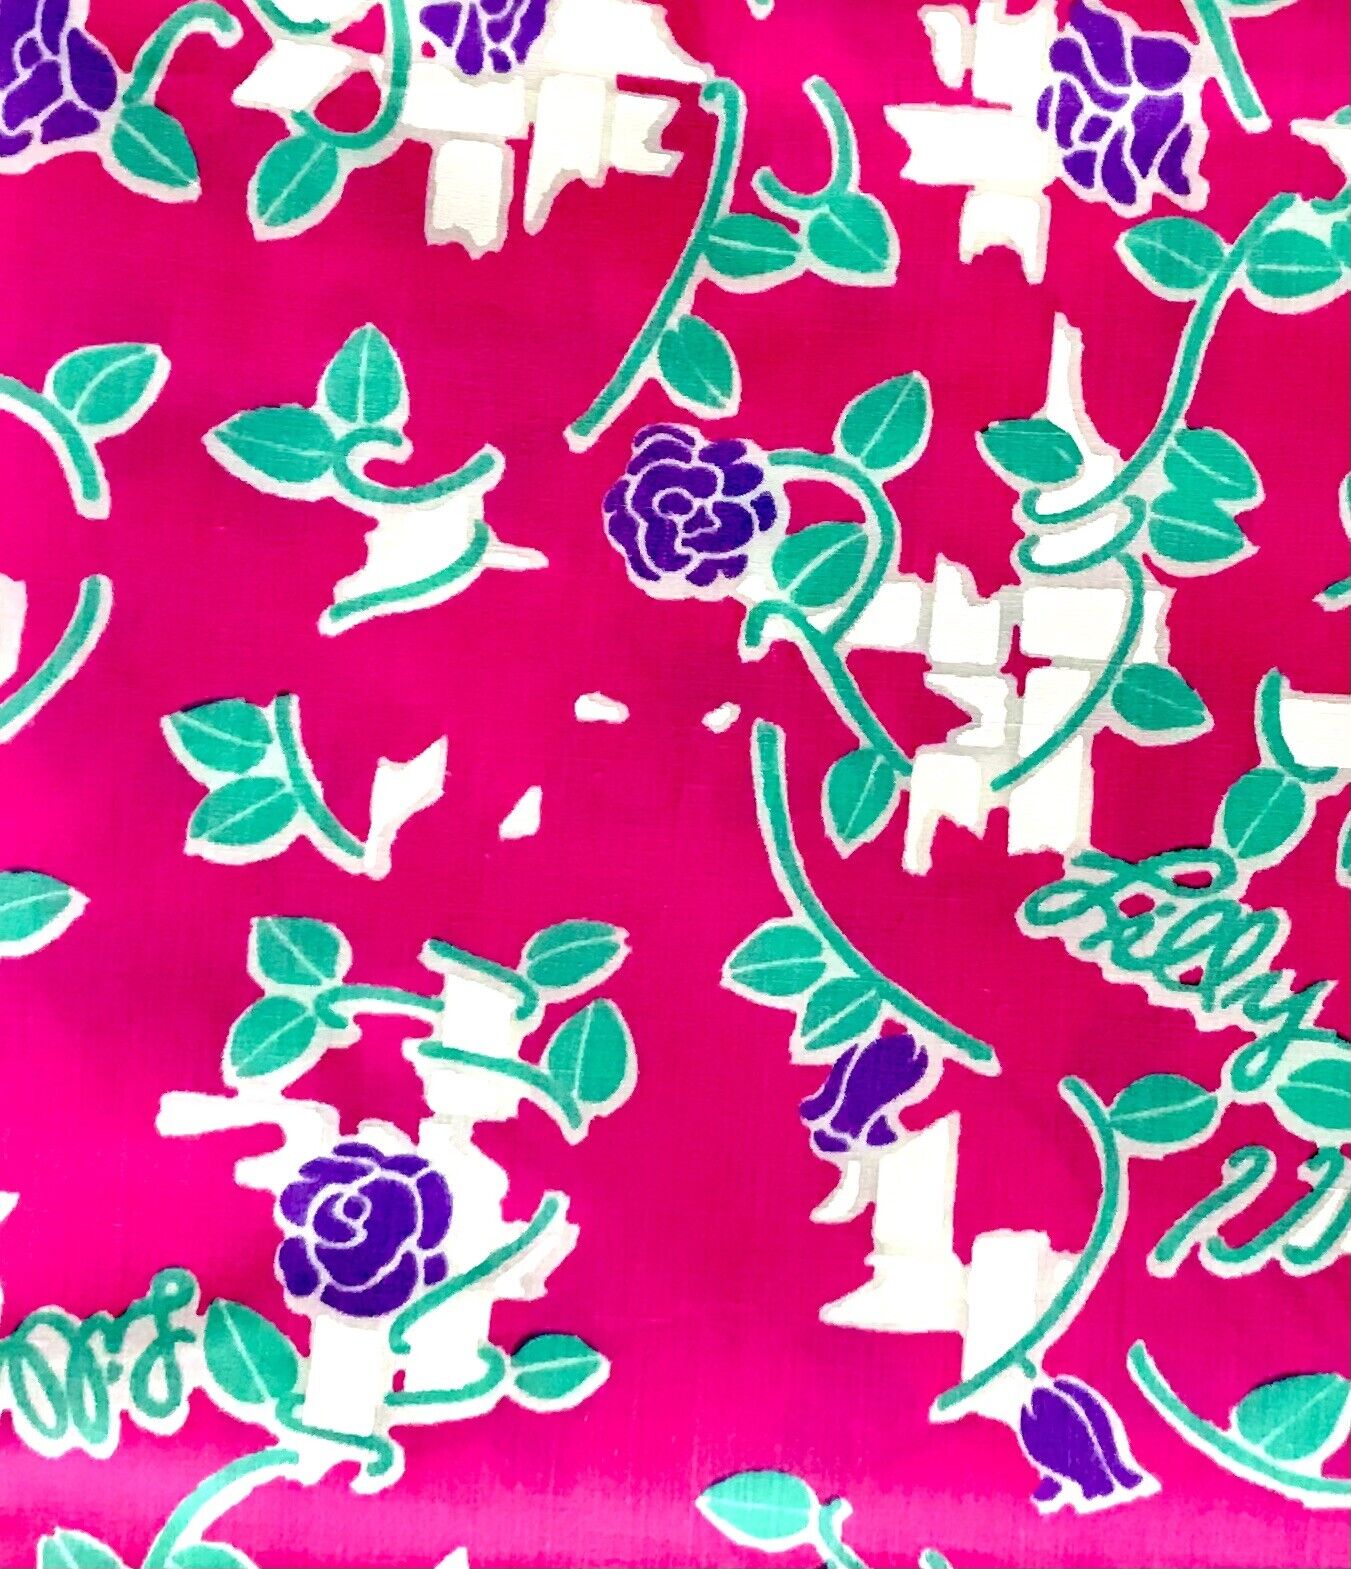 Vintage Key West Handprint Fabrics Lilly Pulitzer Bright Pink Gazebo 46